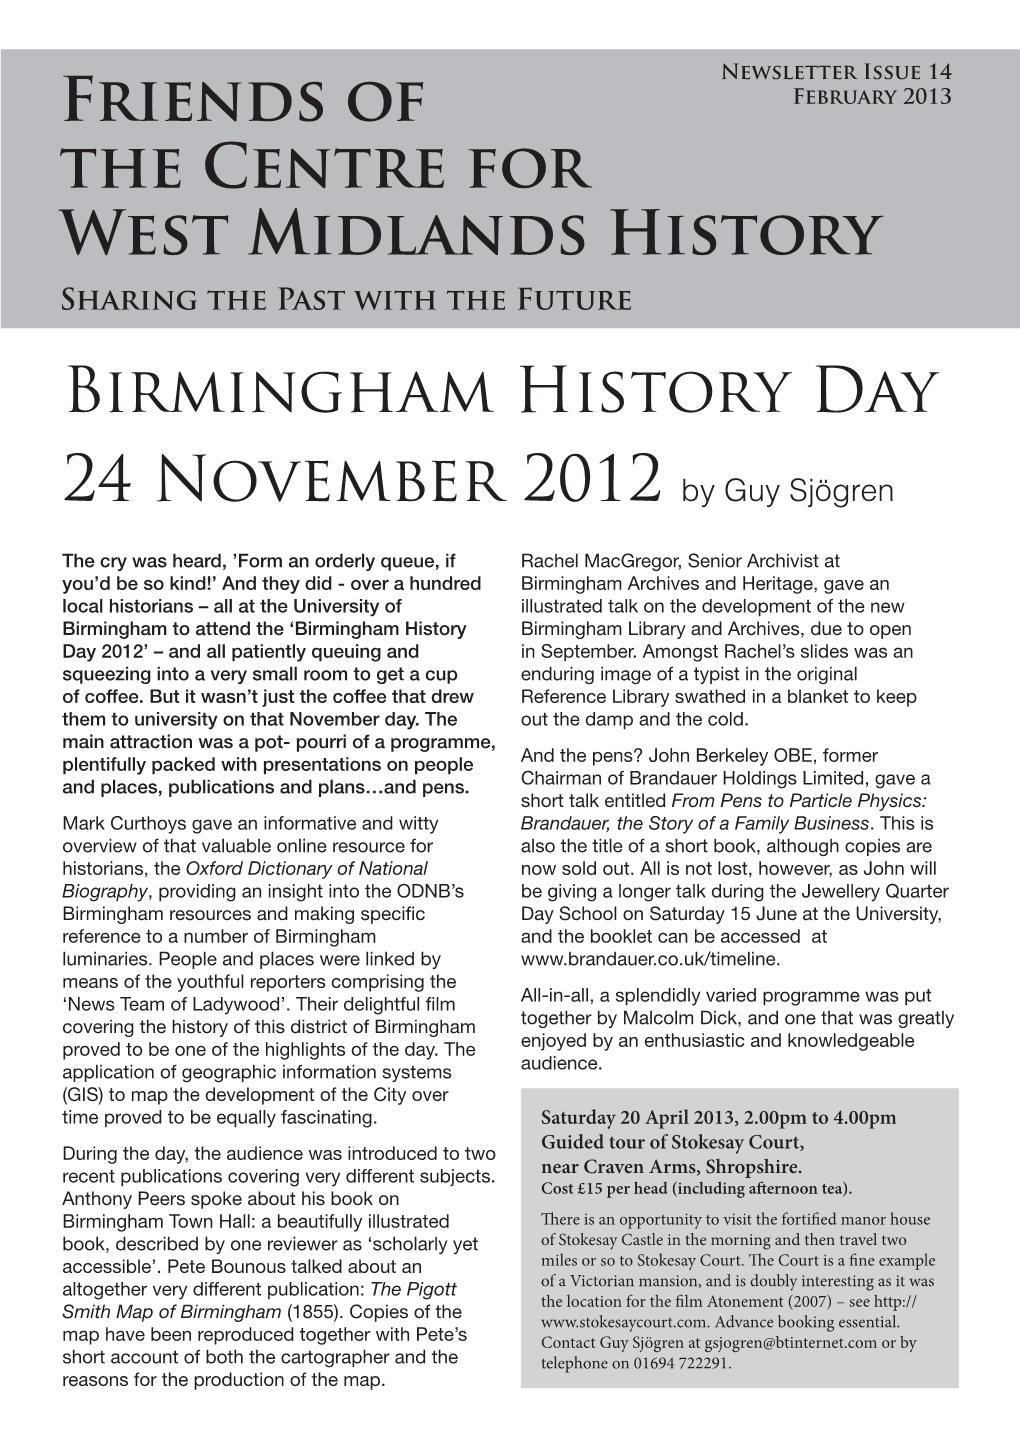 Birmingham History Day 24 November 2012 by Guy Sjögren